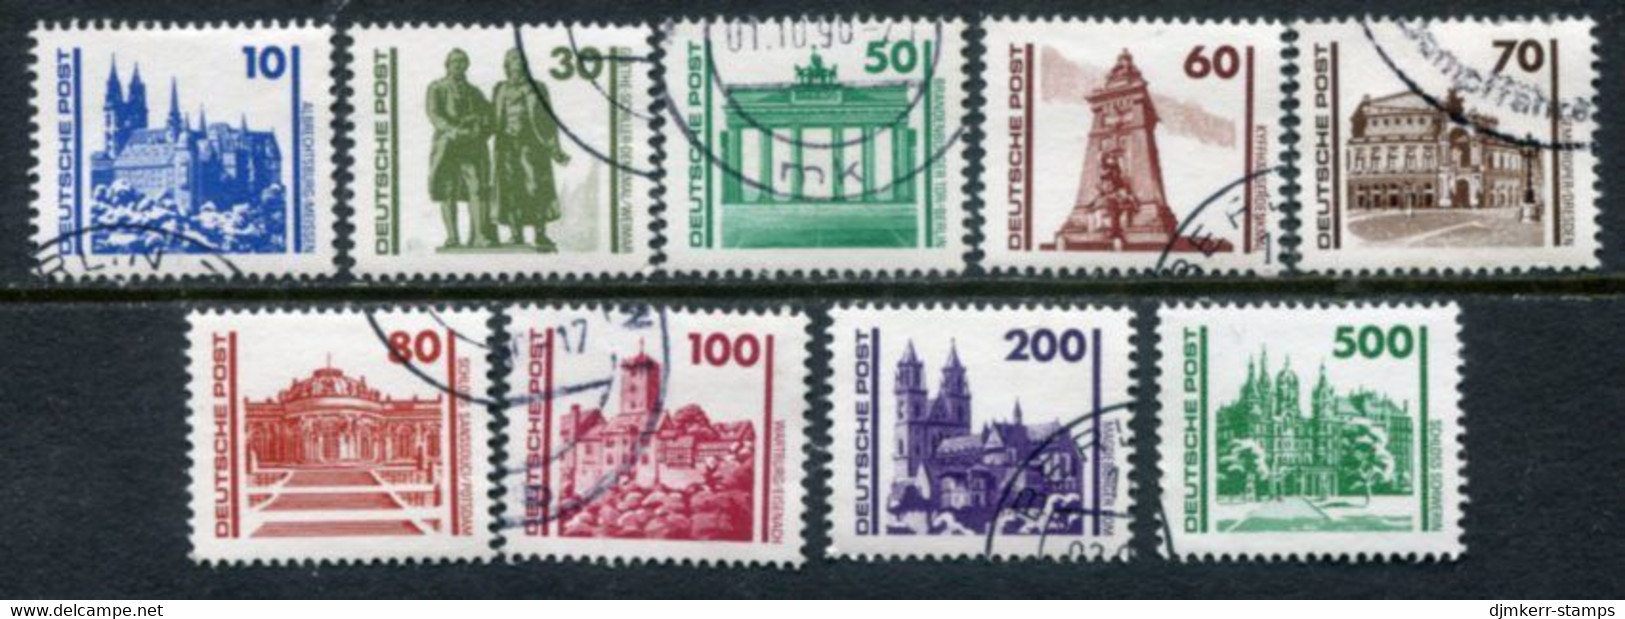 DDR 1990 Buildings And Monuments Definitive Used.  Michel 3344-52 - Oblitérés